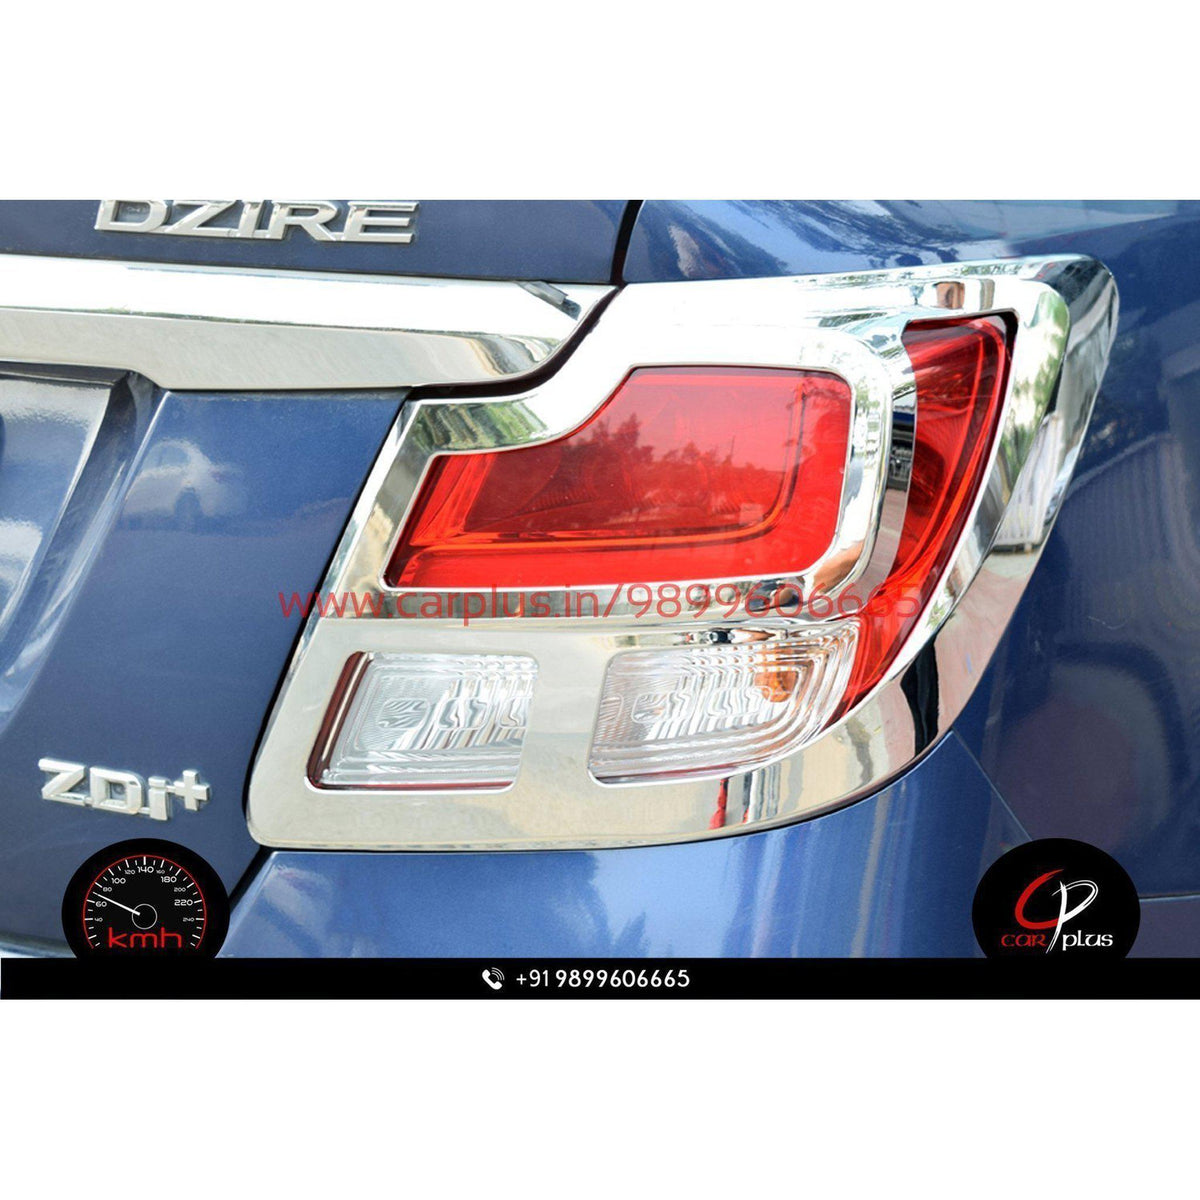 Qubolin Headlight Cover Chrome for Maruti Suzuki Dzire (3rd GEN